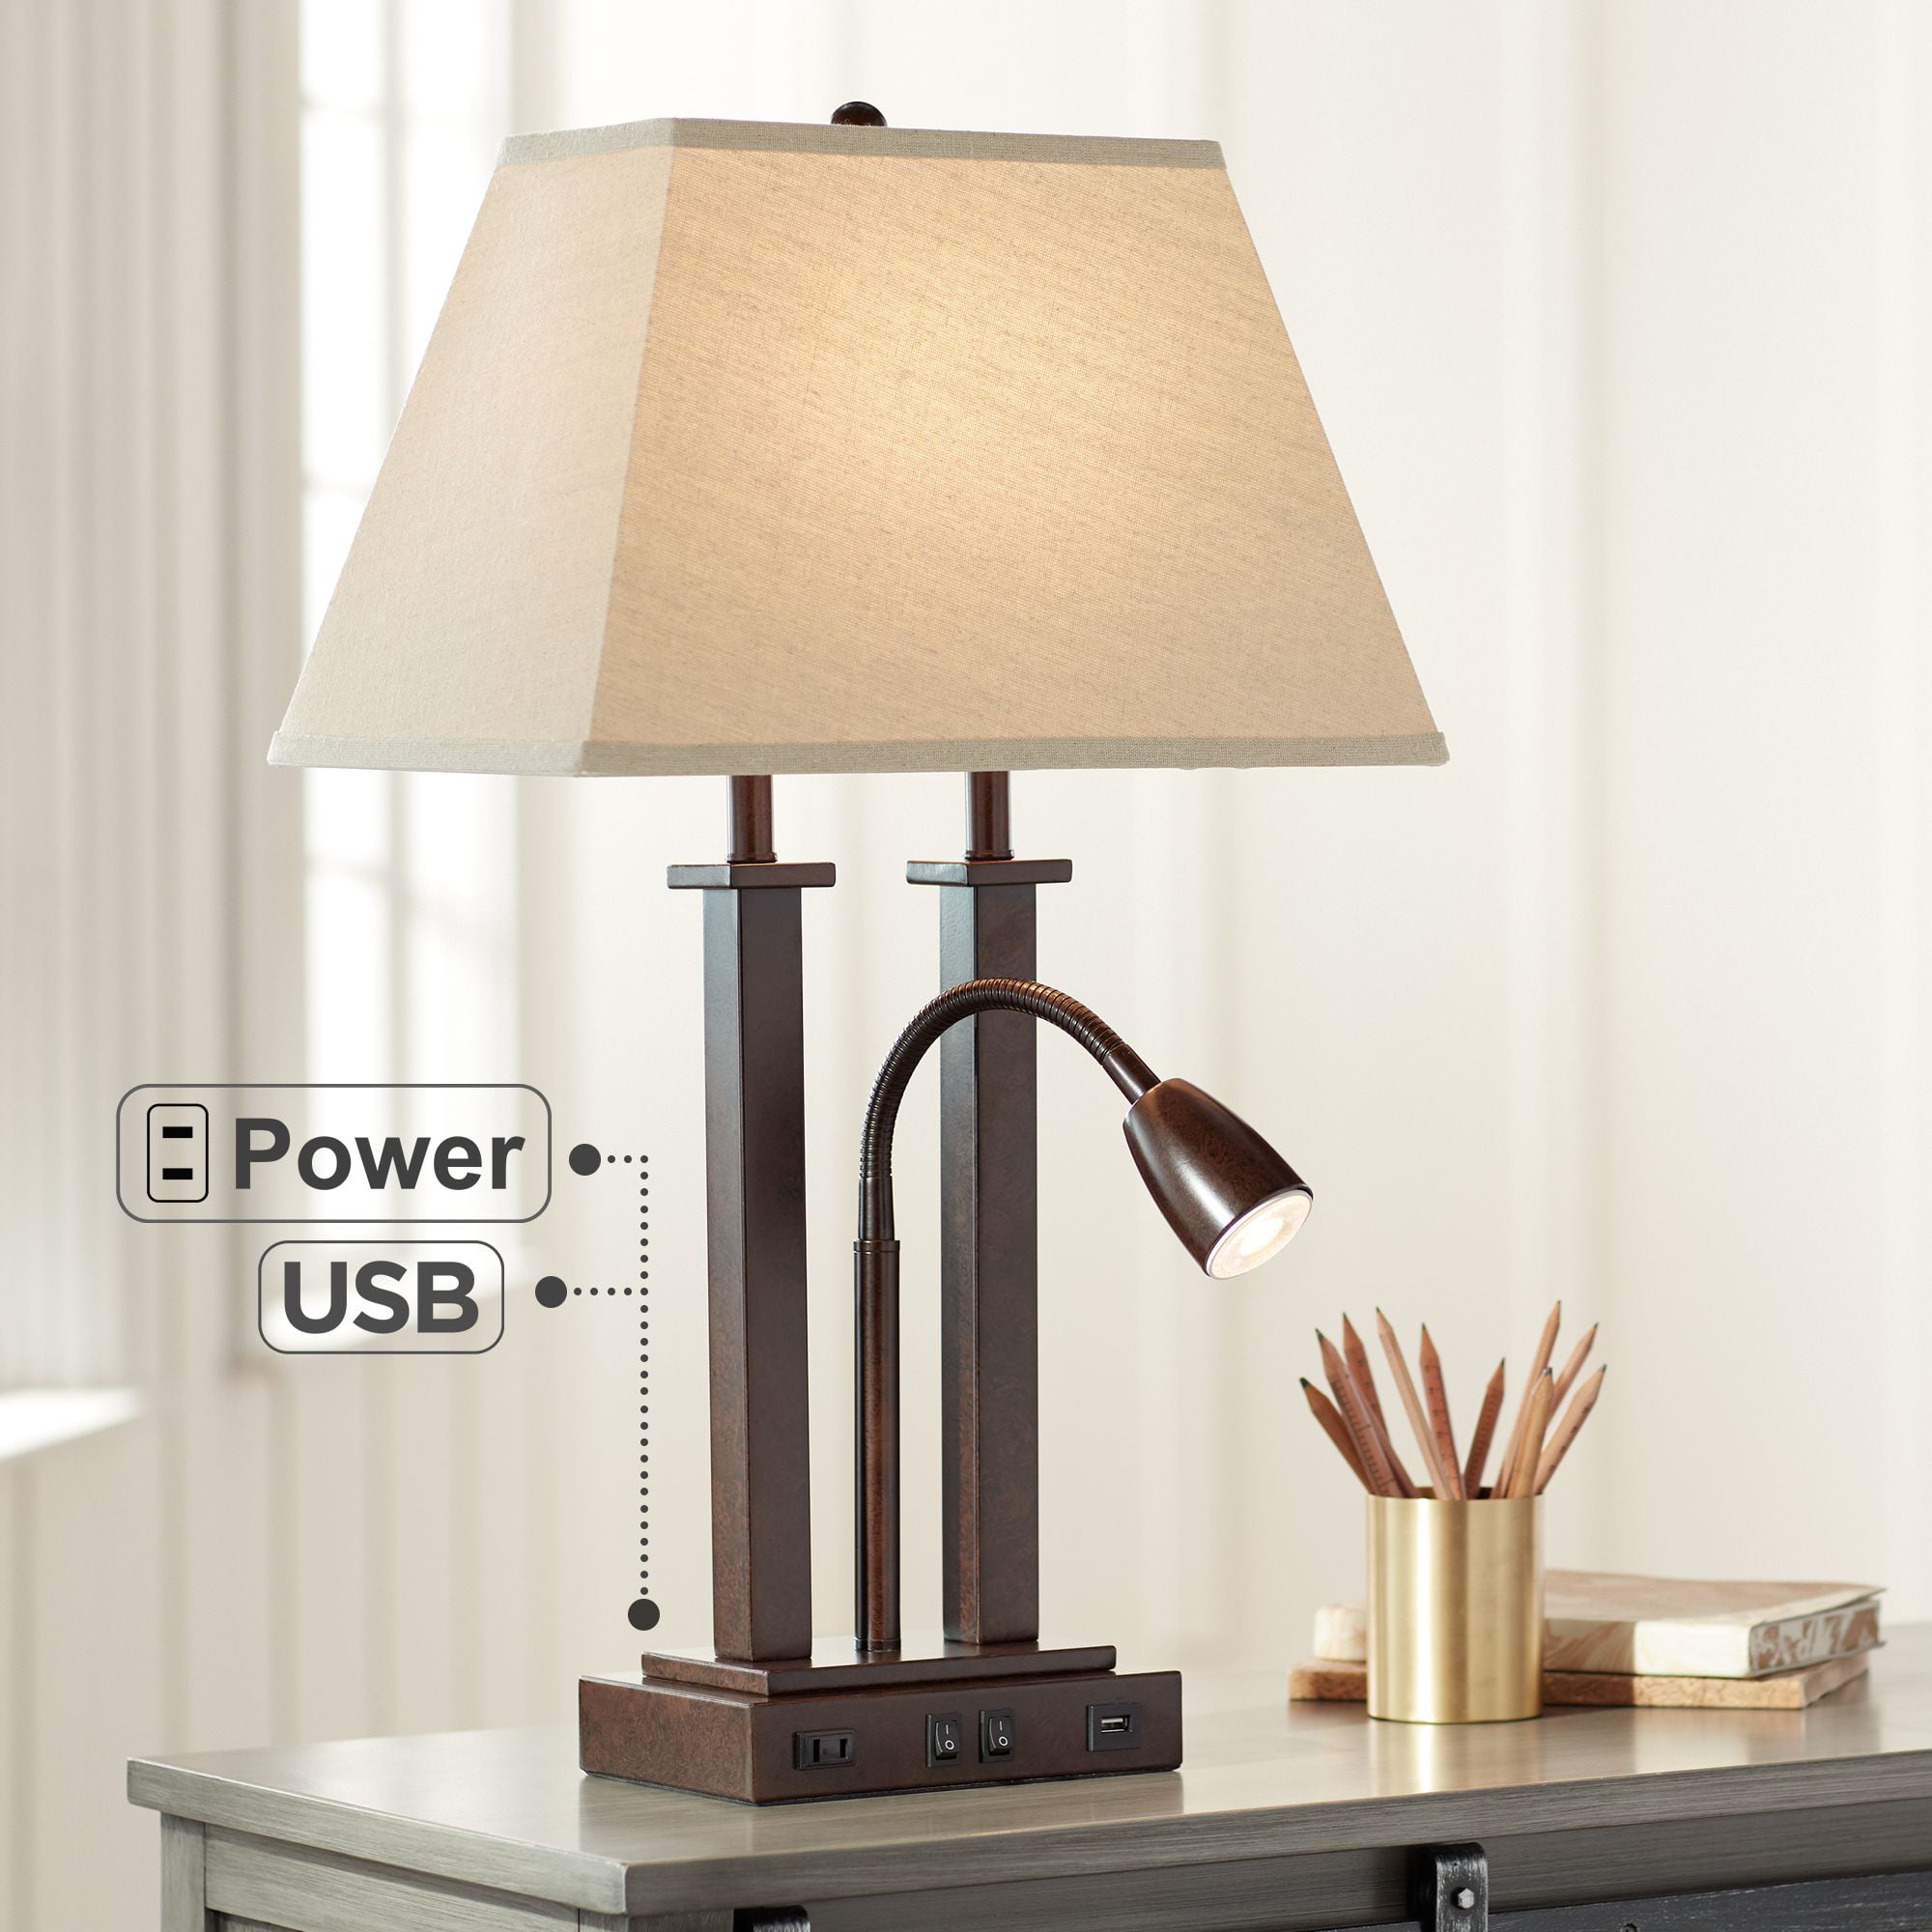 NEW Rural Style Table Lamp Bedroom Desk Light Reading Lights Lighting Dimmable 